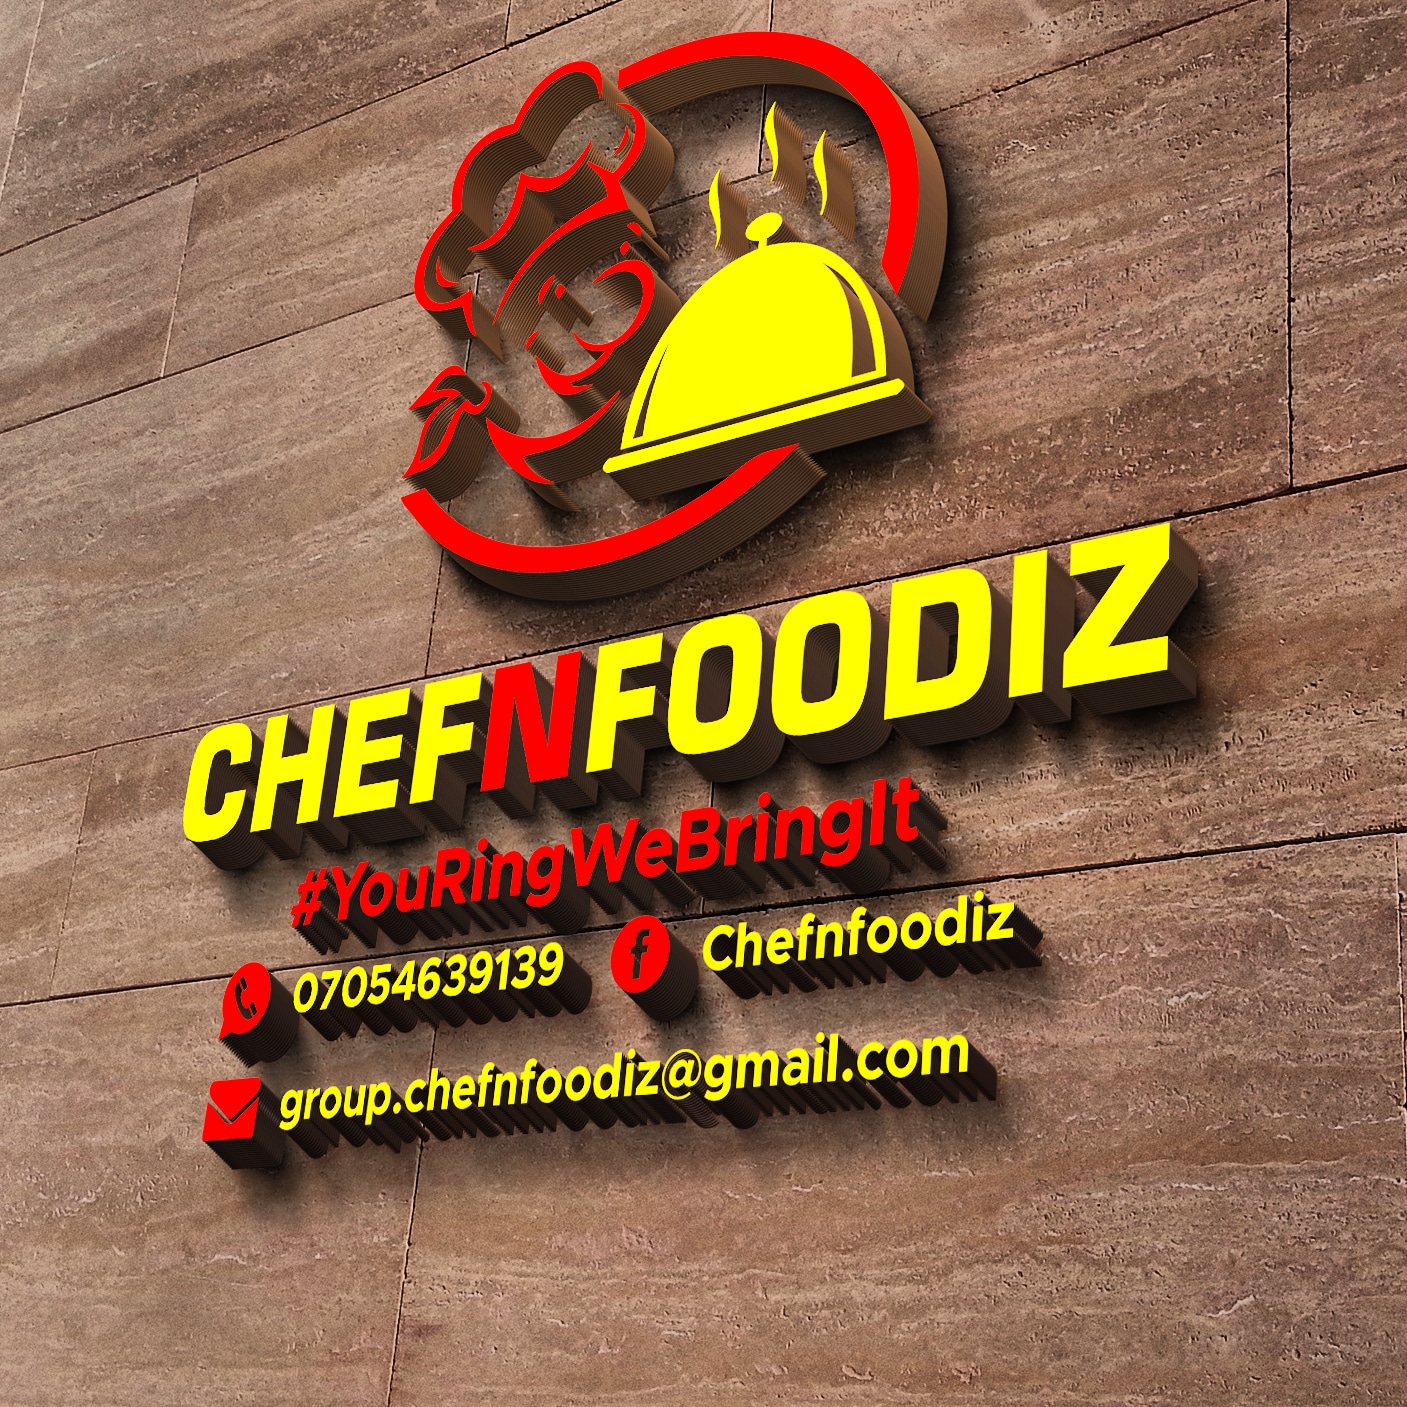 Chefnfoodiz Food service anyservice service provider